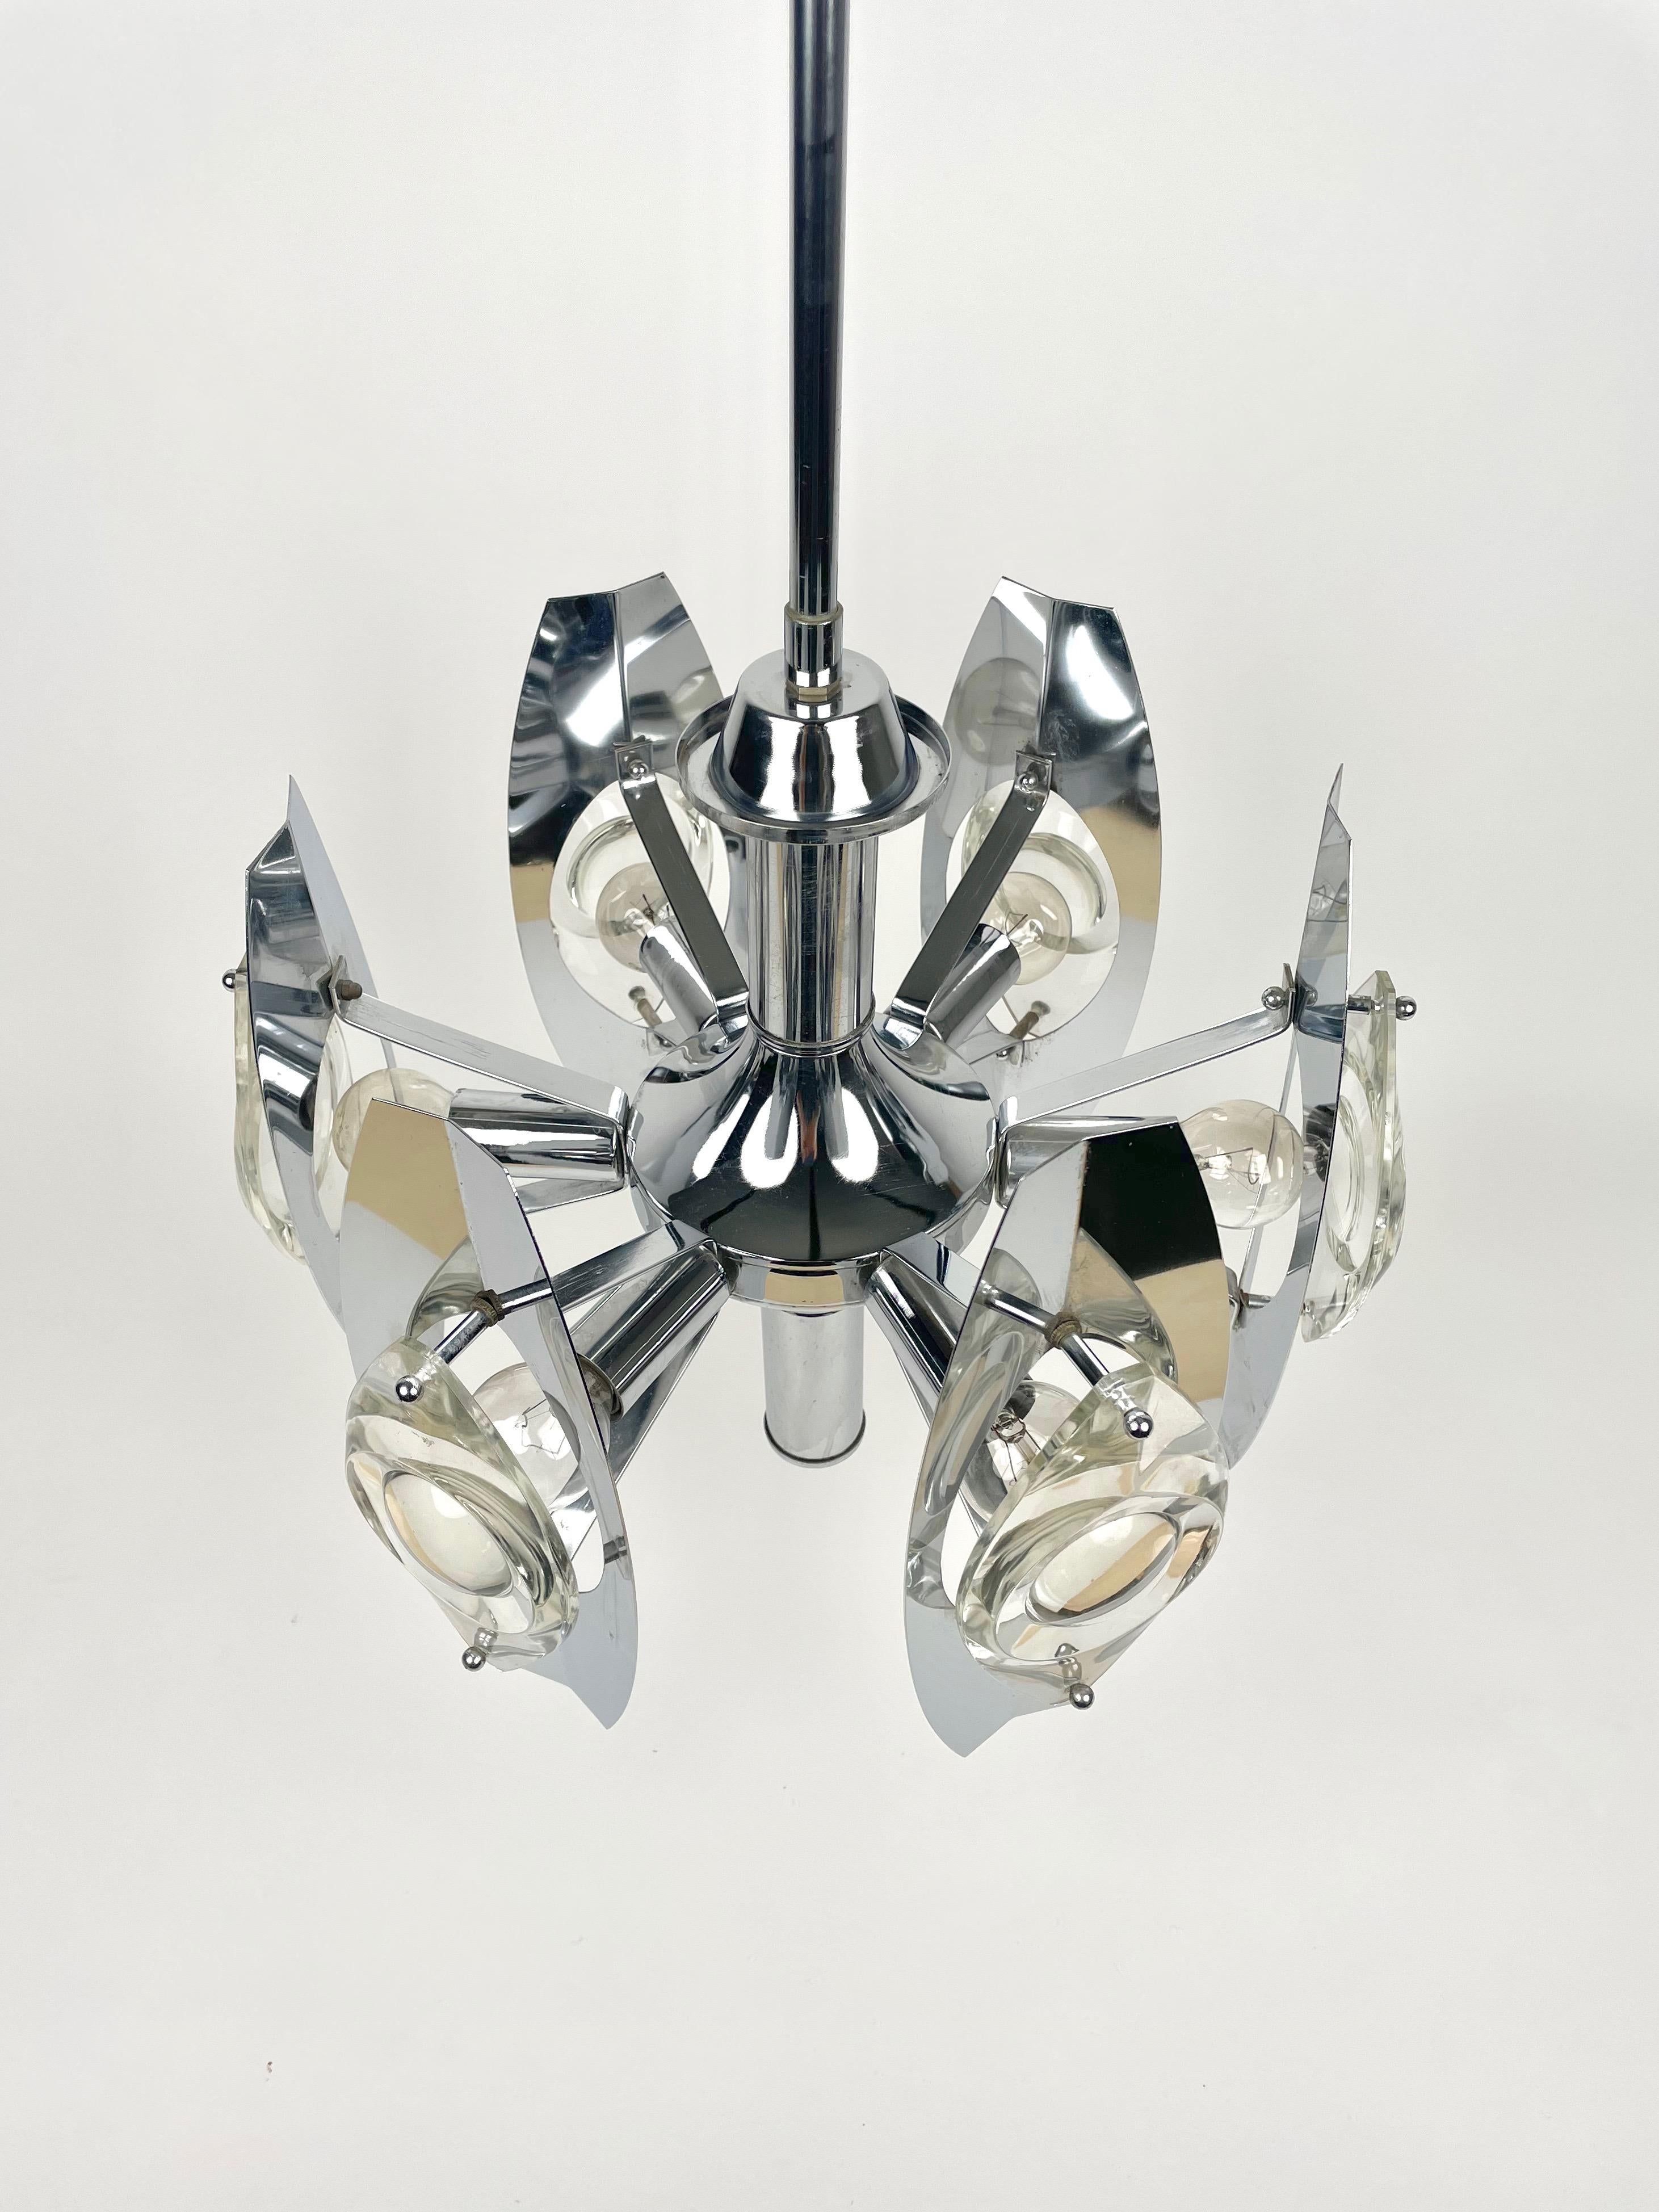 Oscar Torlasco Chromglaslinsen Sechs Lights Kronleuchter Lampe, Italien, 1960er Jahre (Ende des 20. Jahrhunderts) im Angebot